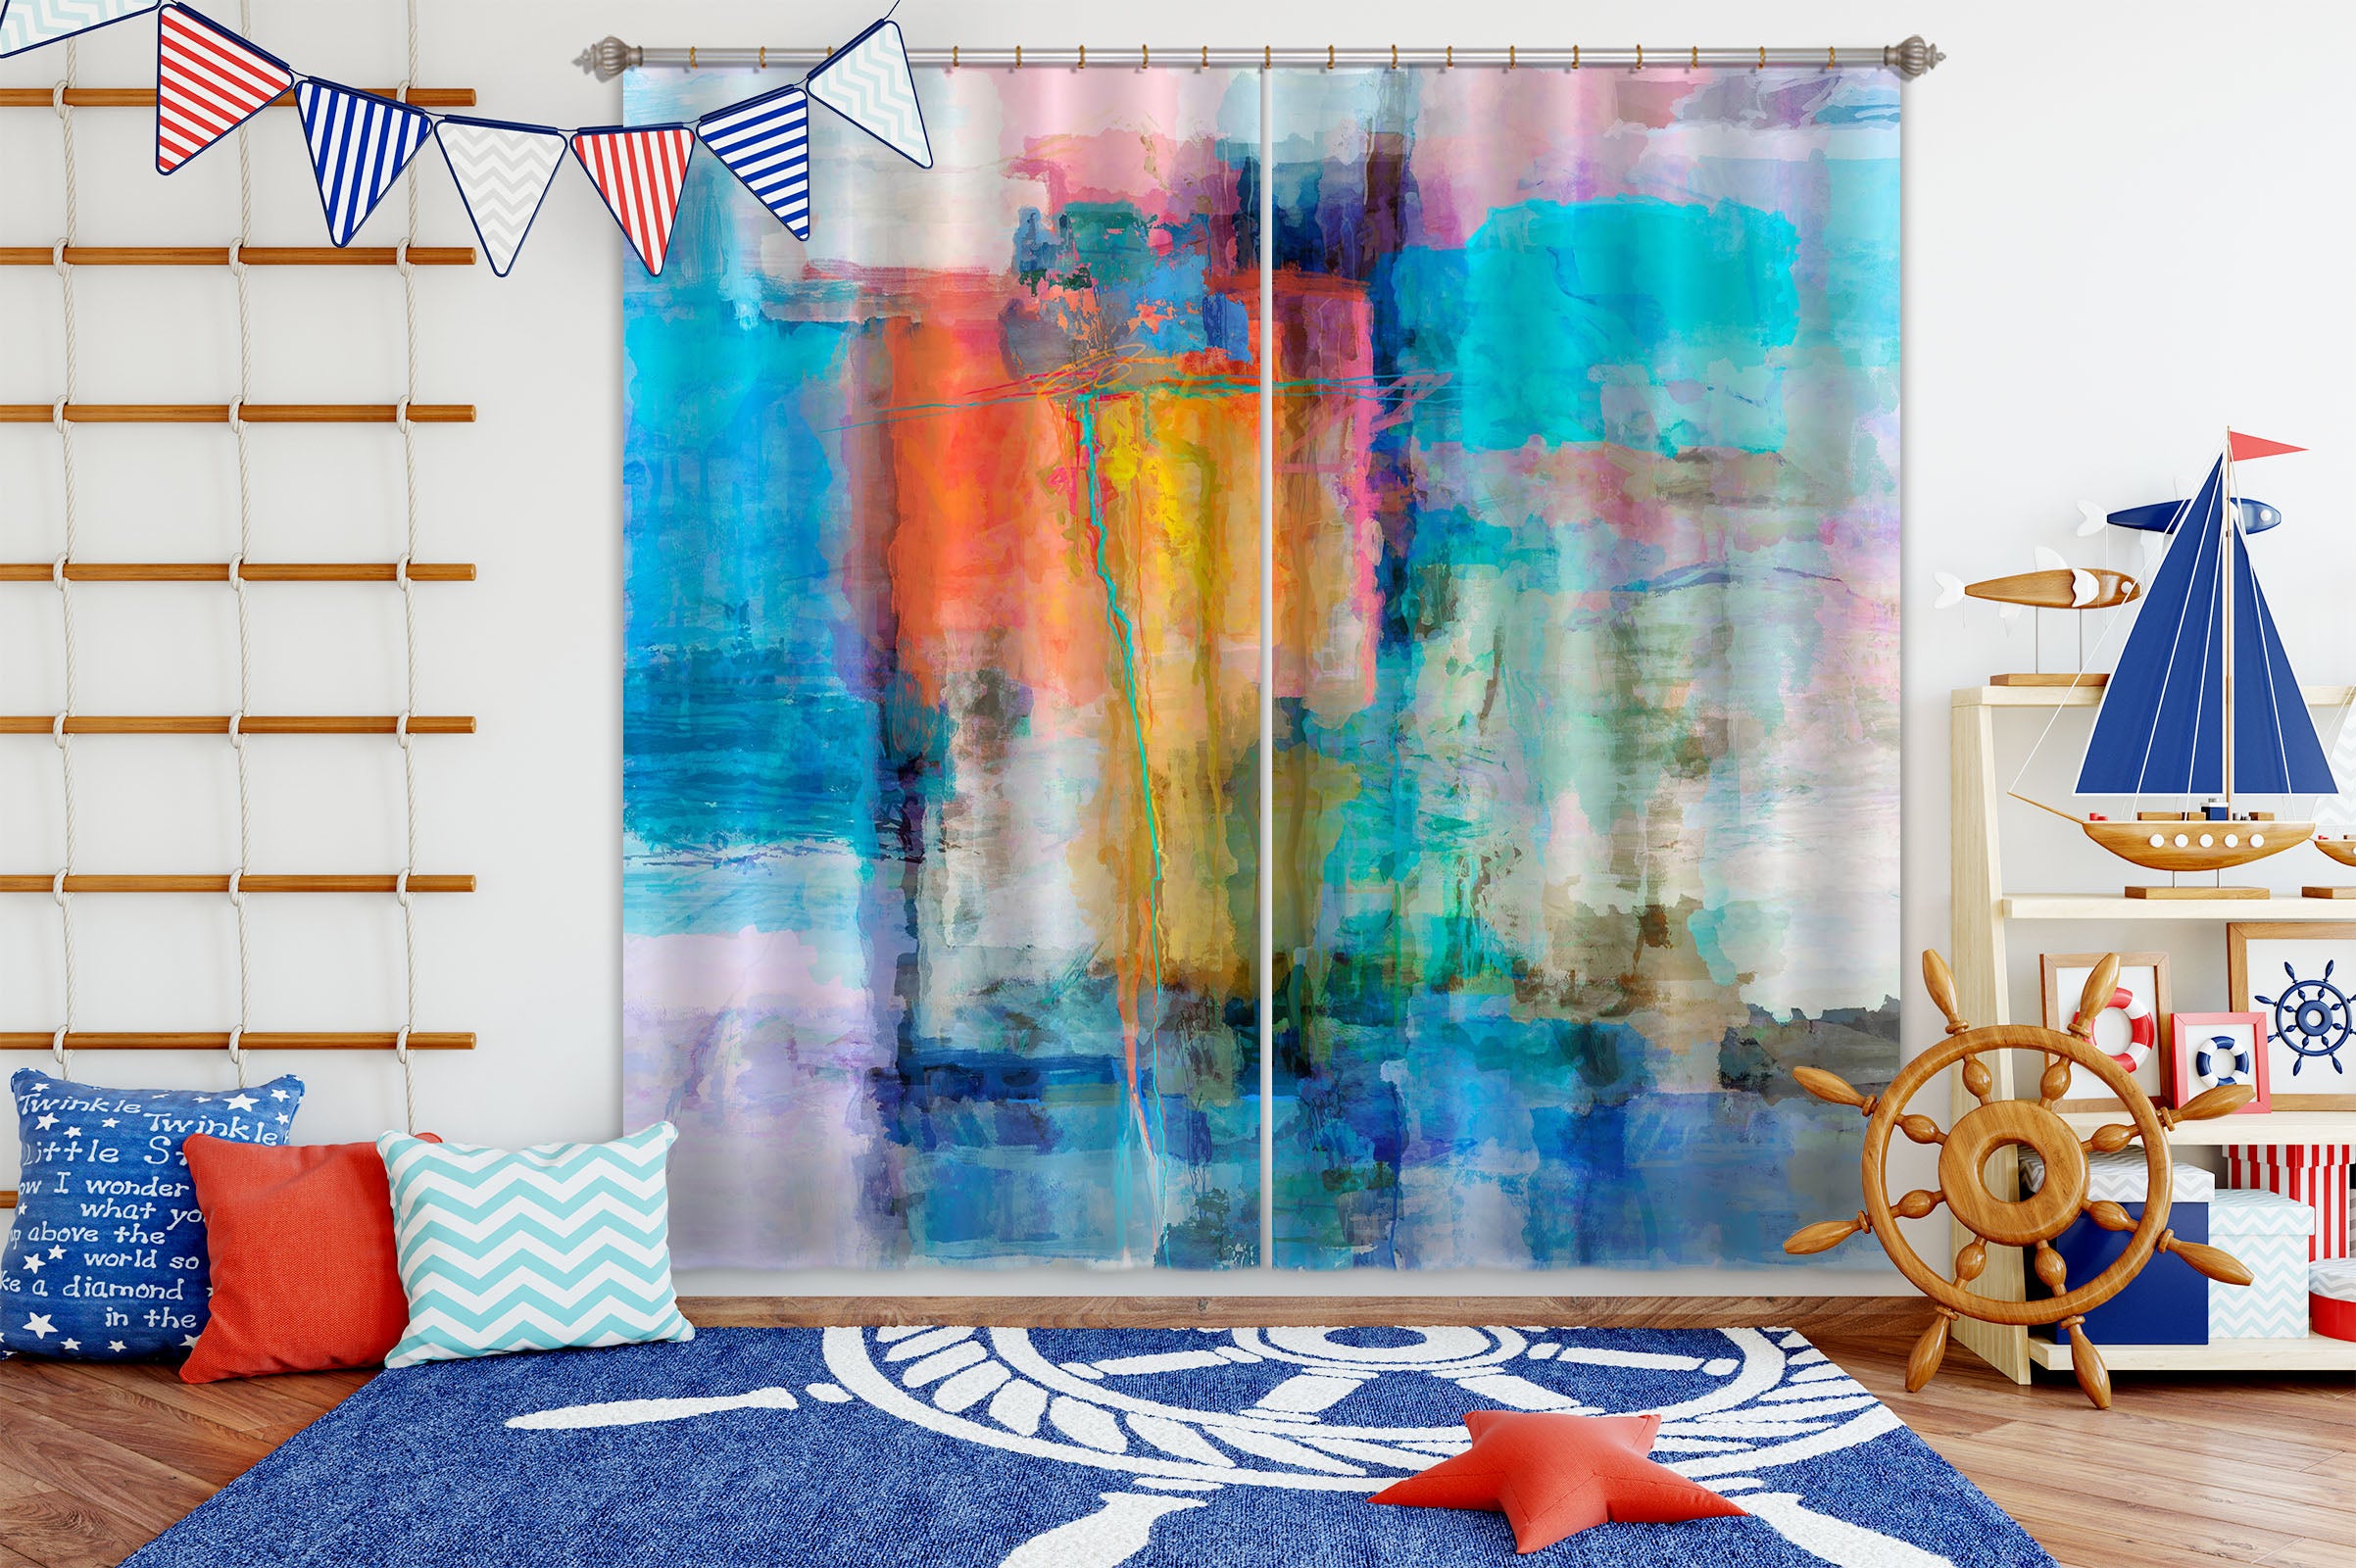 3D Sunset Sea 207 Michael Tienhaara Curtain Curtains Drapes